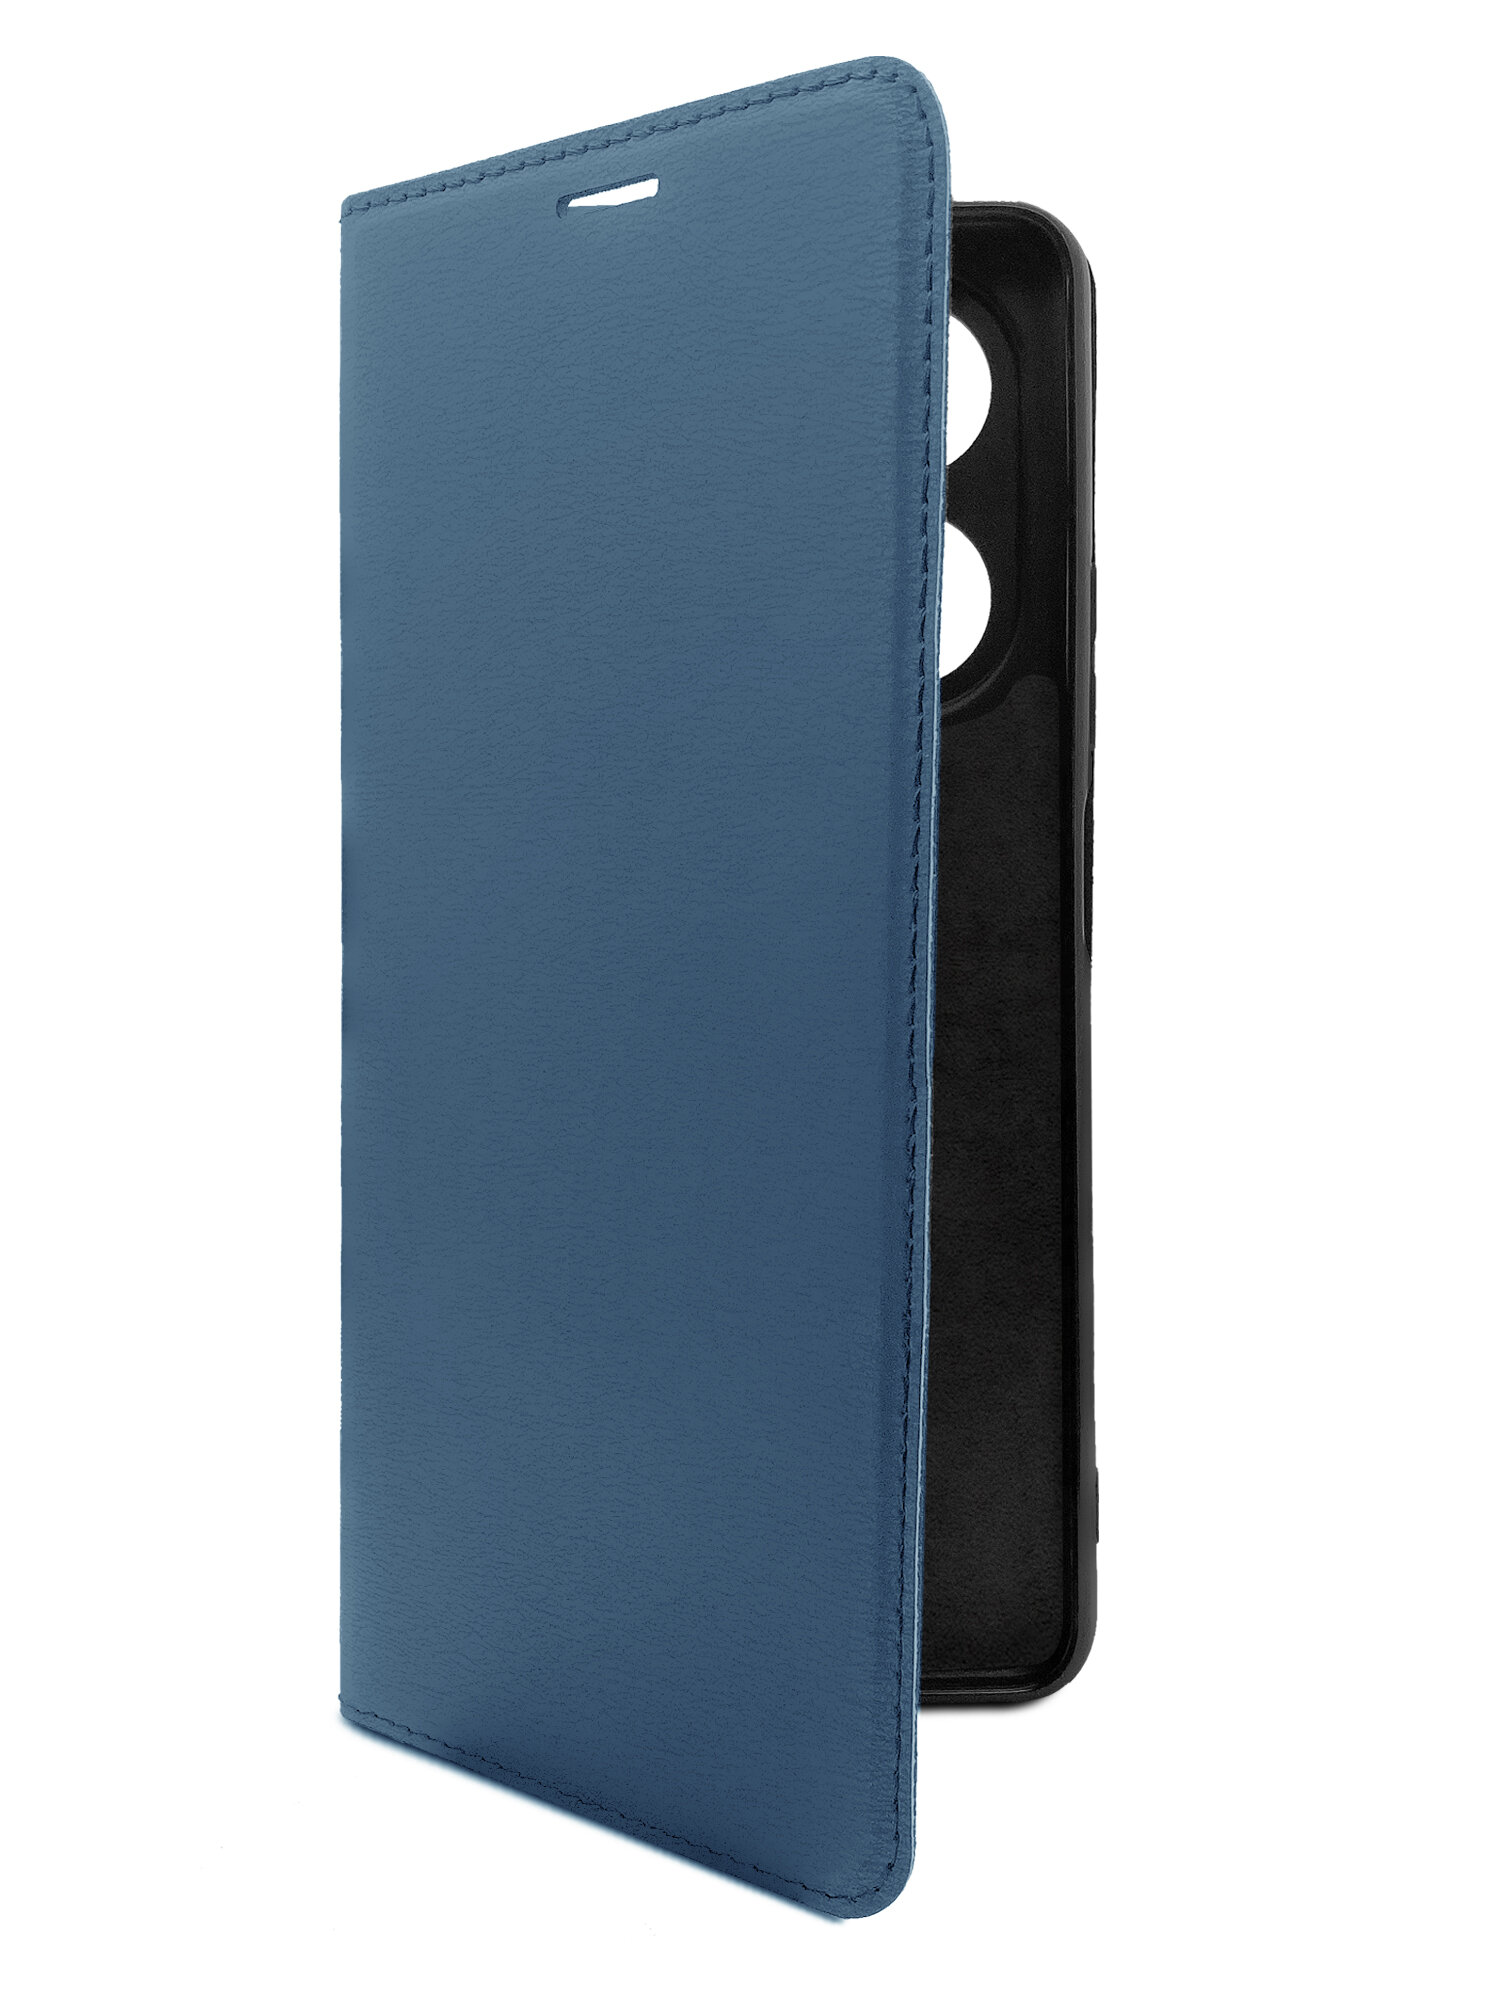 Чехол на Infinix HOT 40 Pro (Инфиникс ХОТ 40 Про) синий книжка эко-кожа с функцией подставки отделением для карт и магнитами Book Case, Brozo